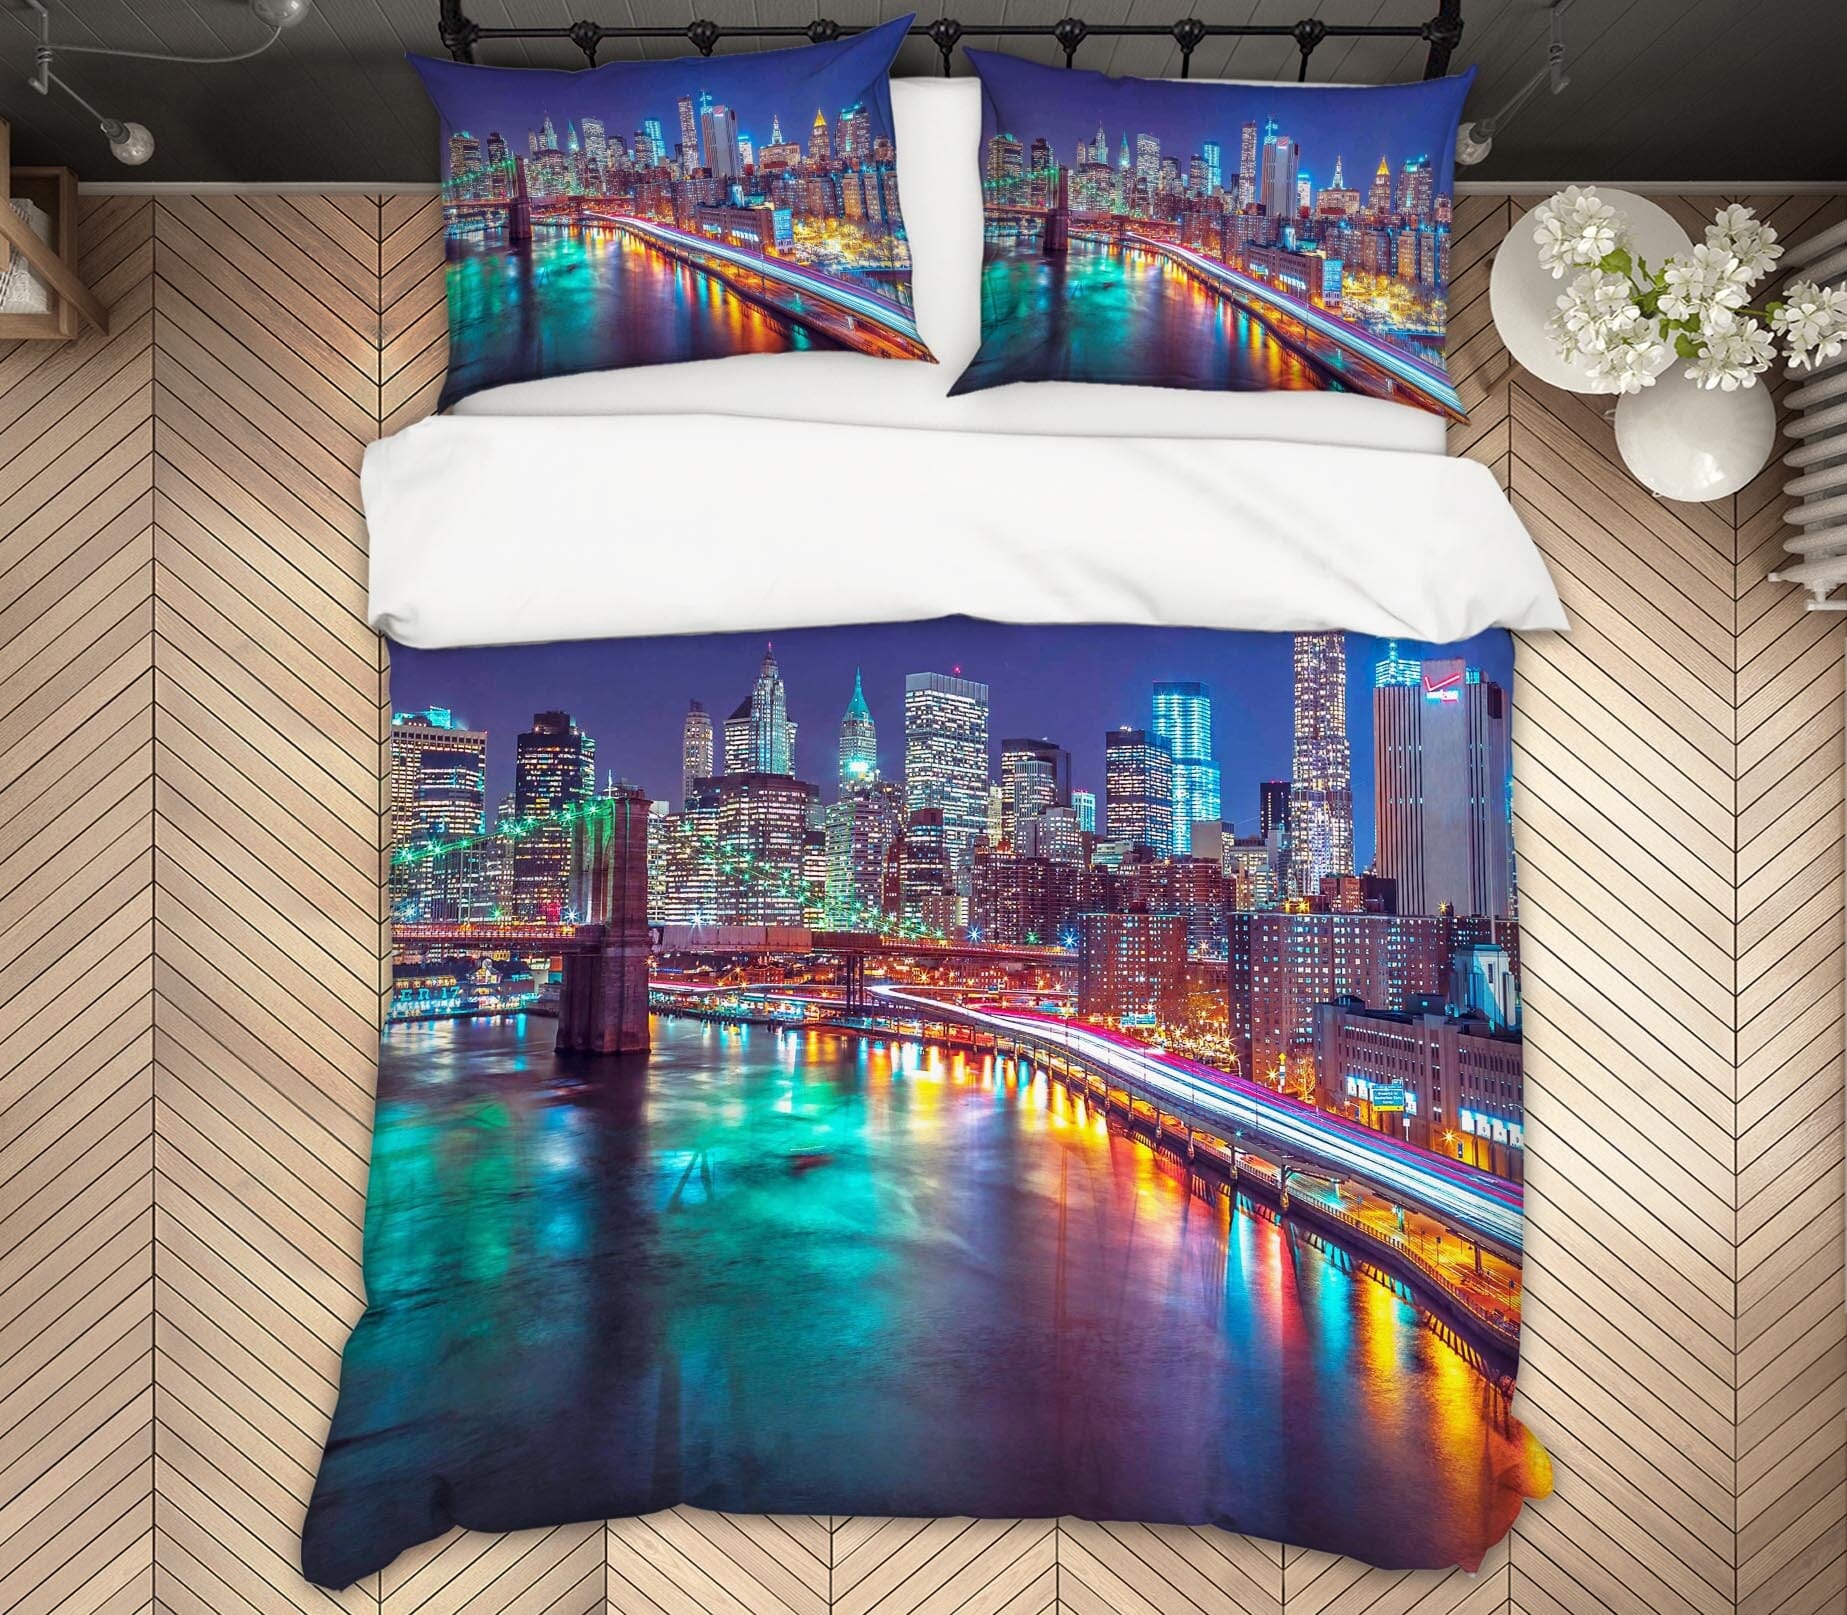 3D Paris Lights 2008 Assaf Frank Bedding Bed Pillowcases Quilt Quiet Covers AJ Creativity Home 